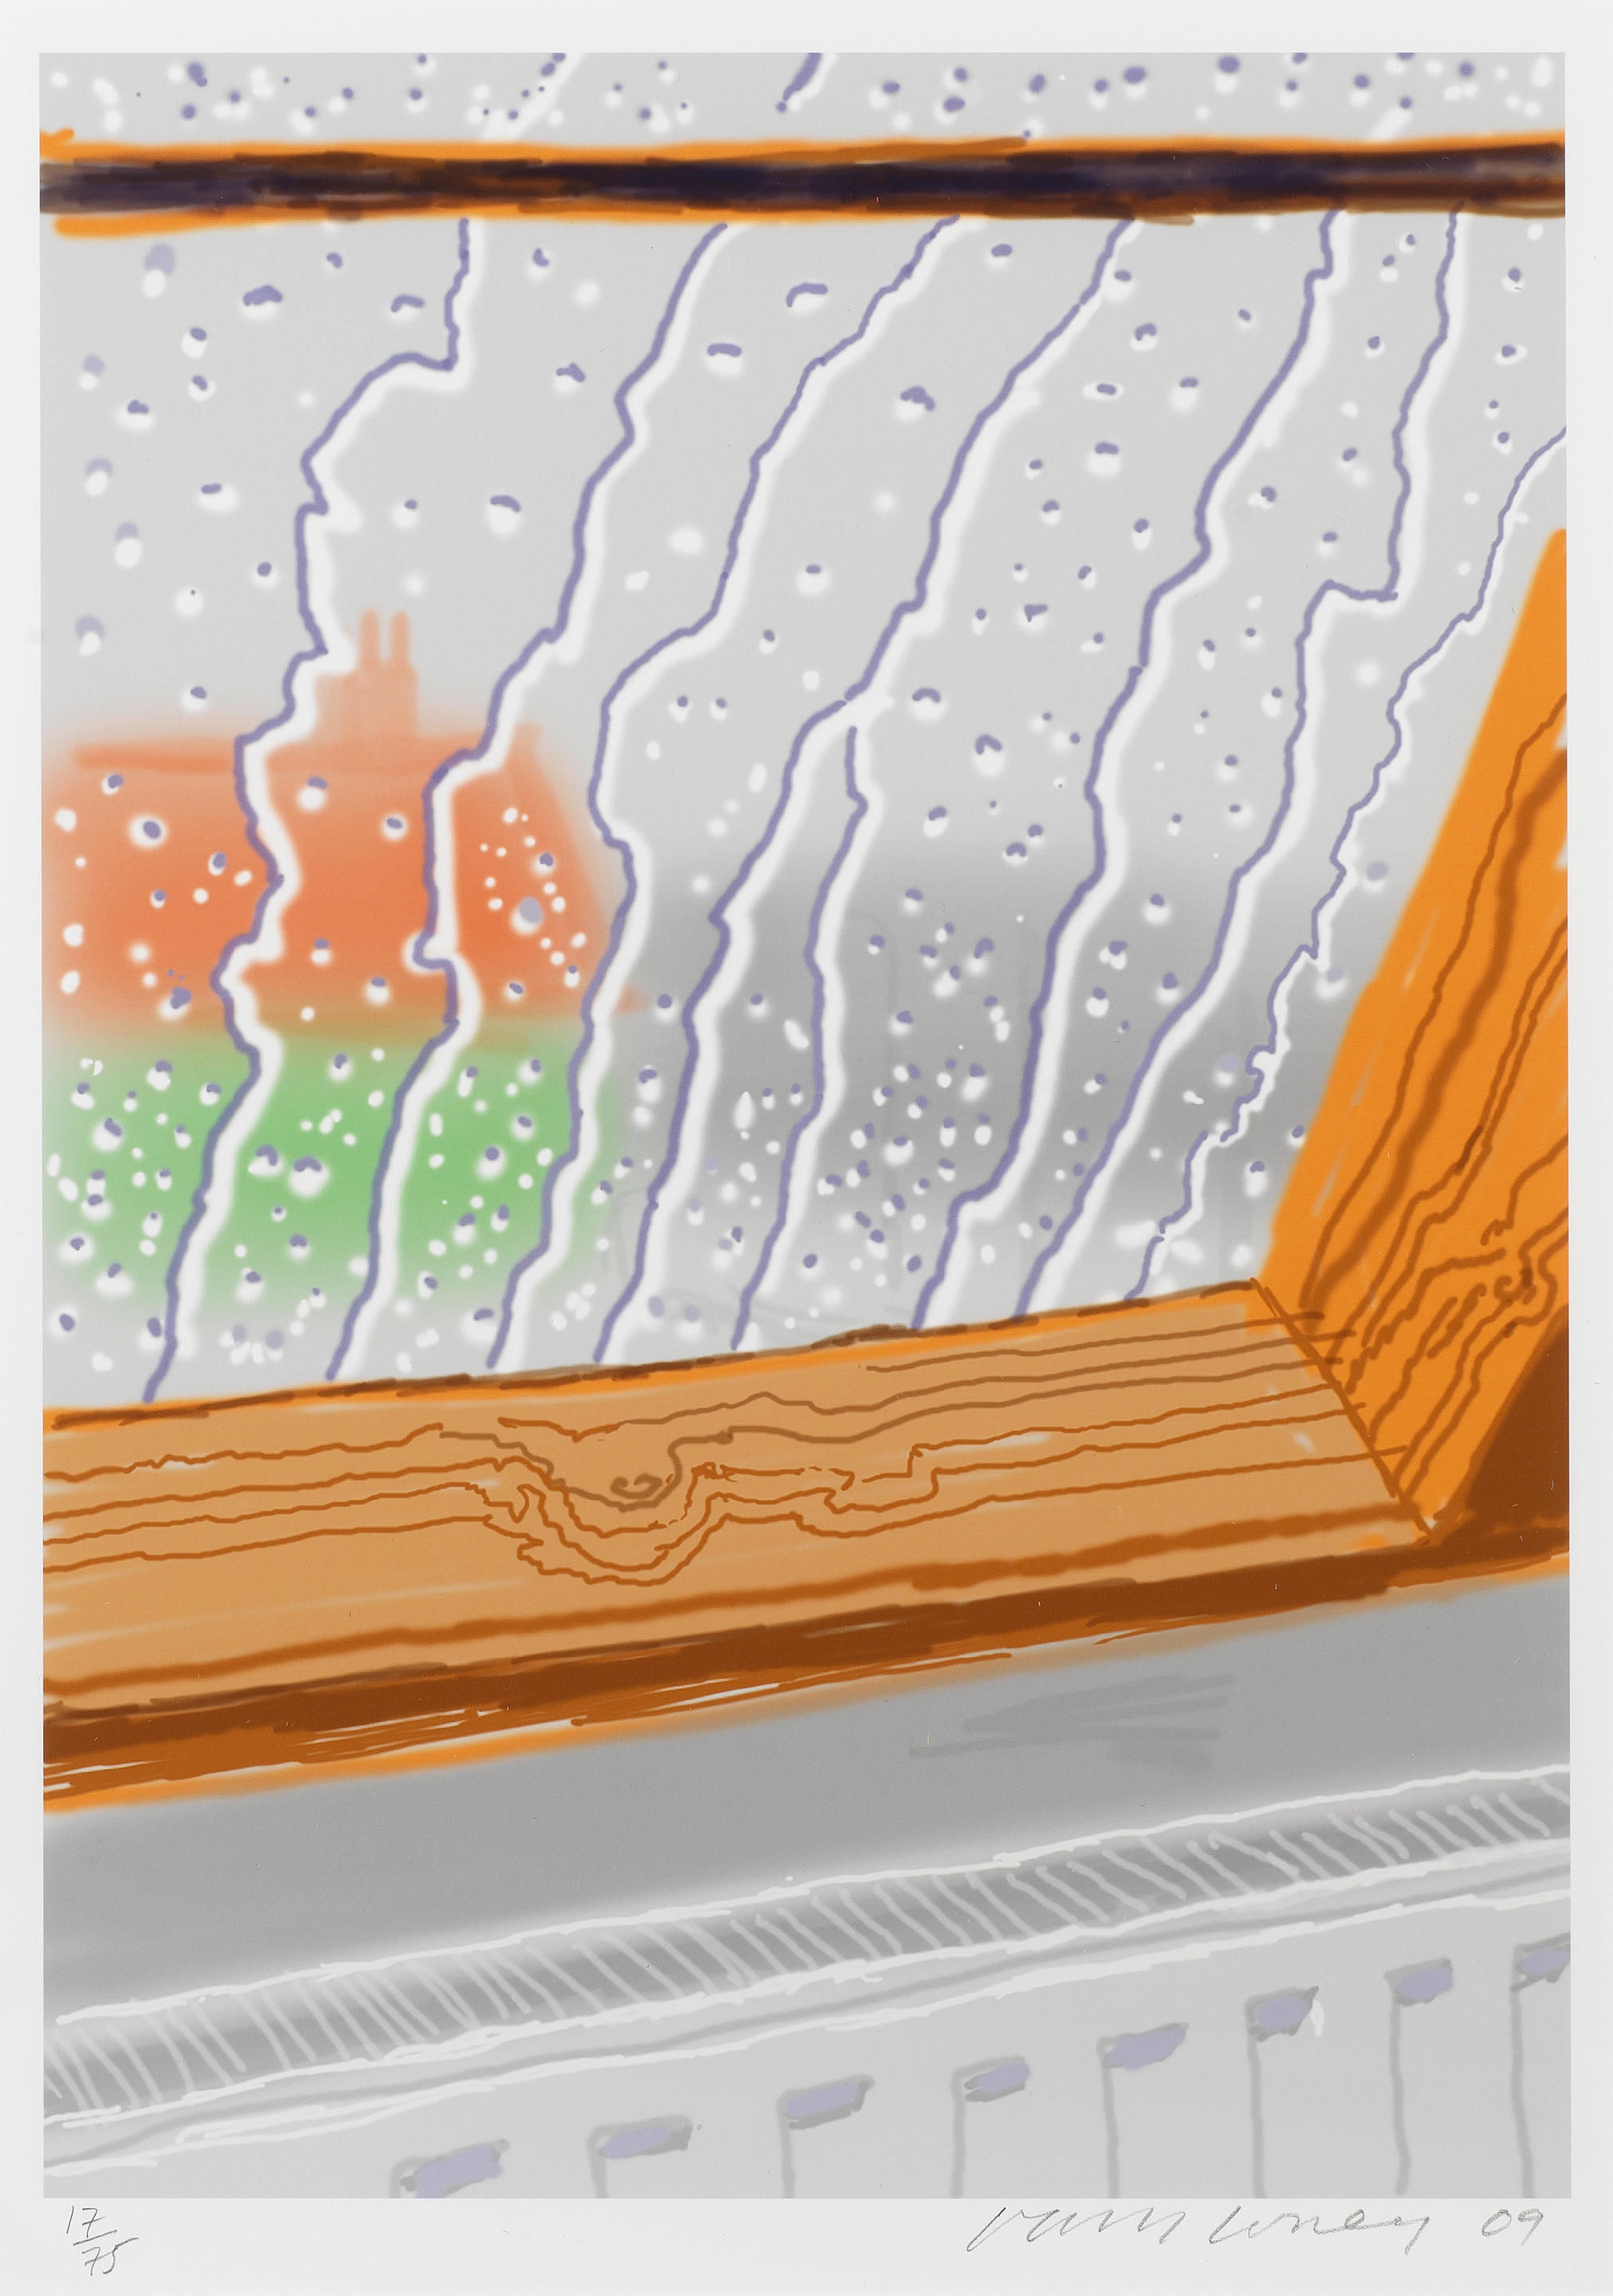 Rain on the Studio Window - David Hockney